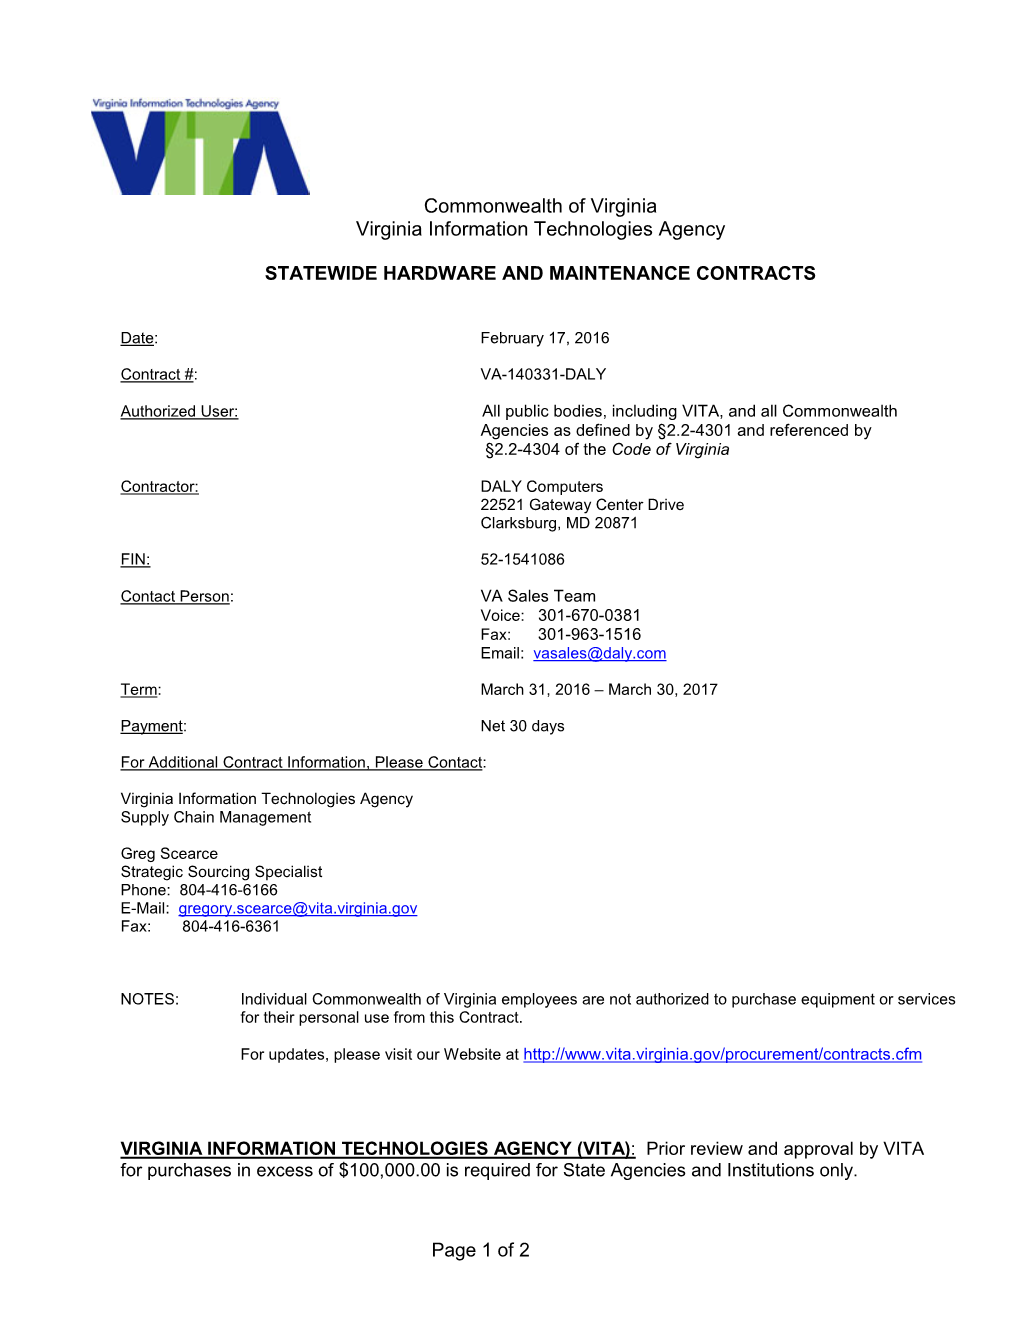 Commonwealth of Virginia Virginia Information Technologies Agency